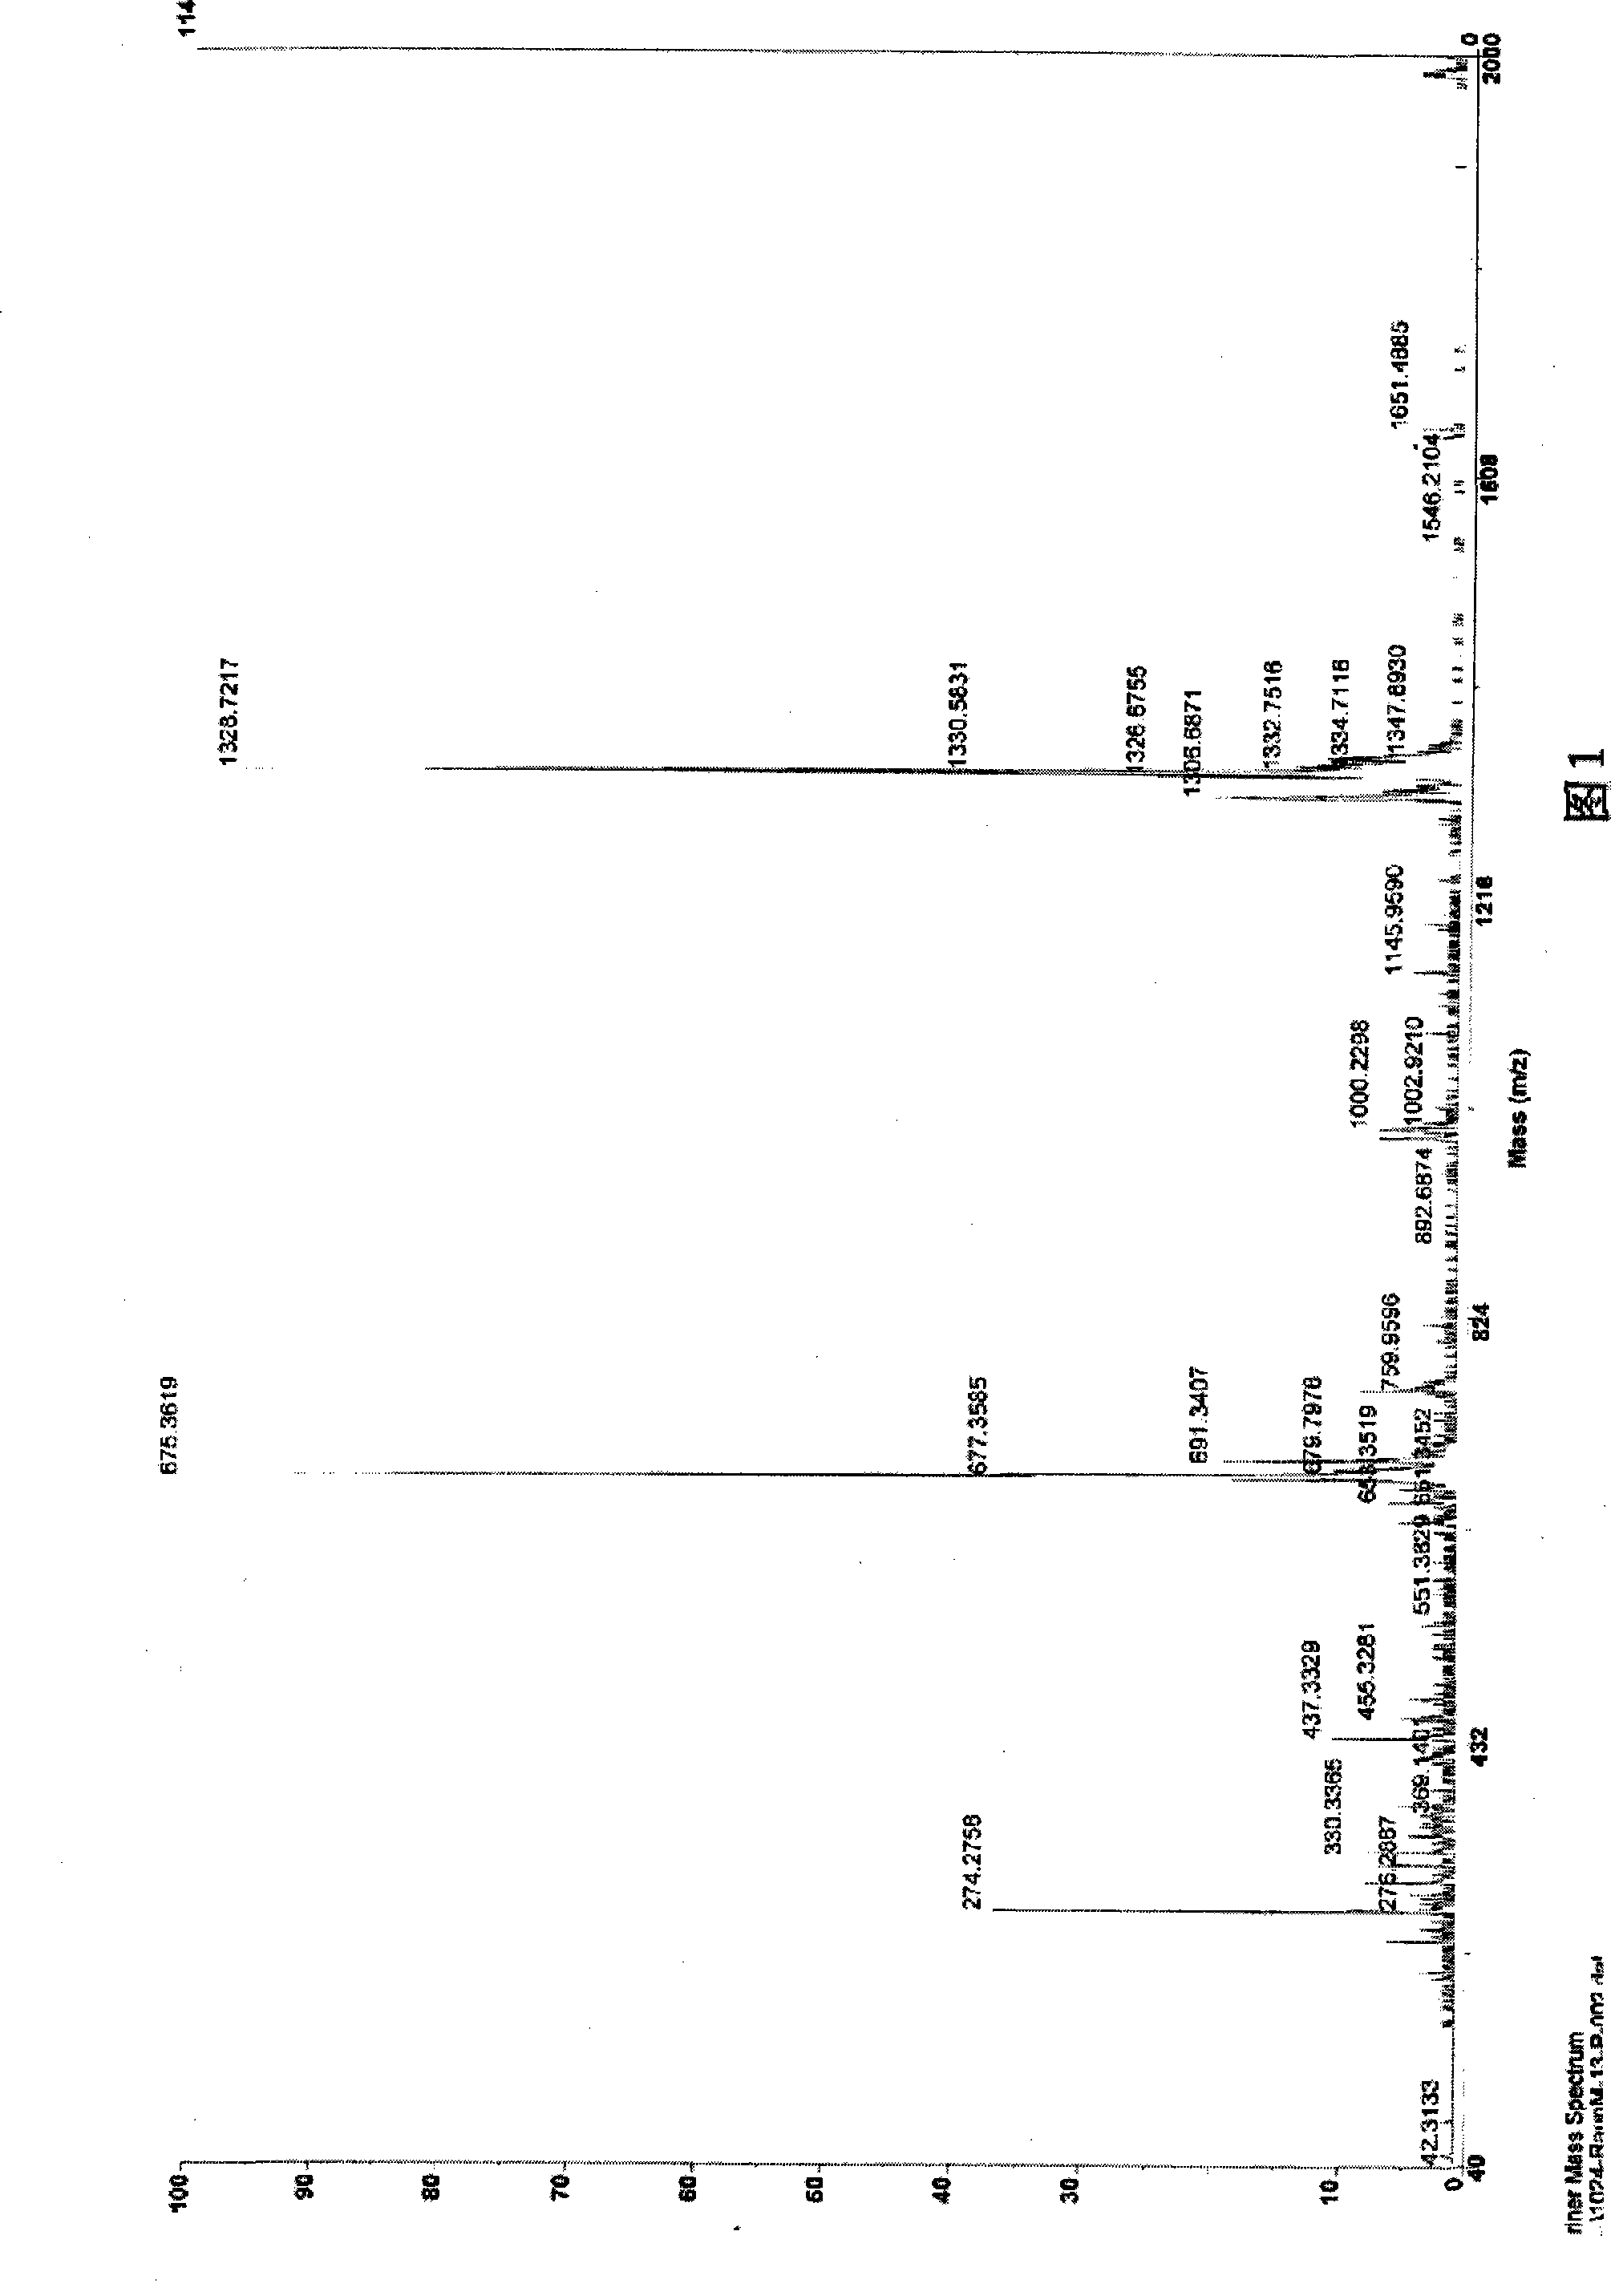 Preparation of 6-O-beta-D- glucosyl-3,6,16,25-tetrahydroxy cycloartane